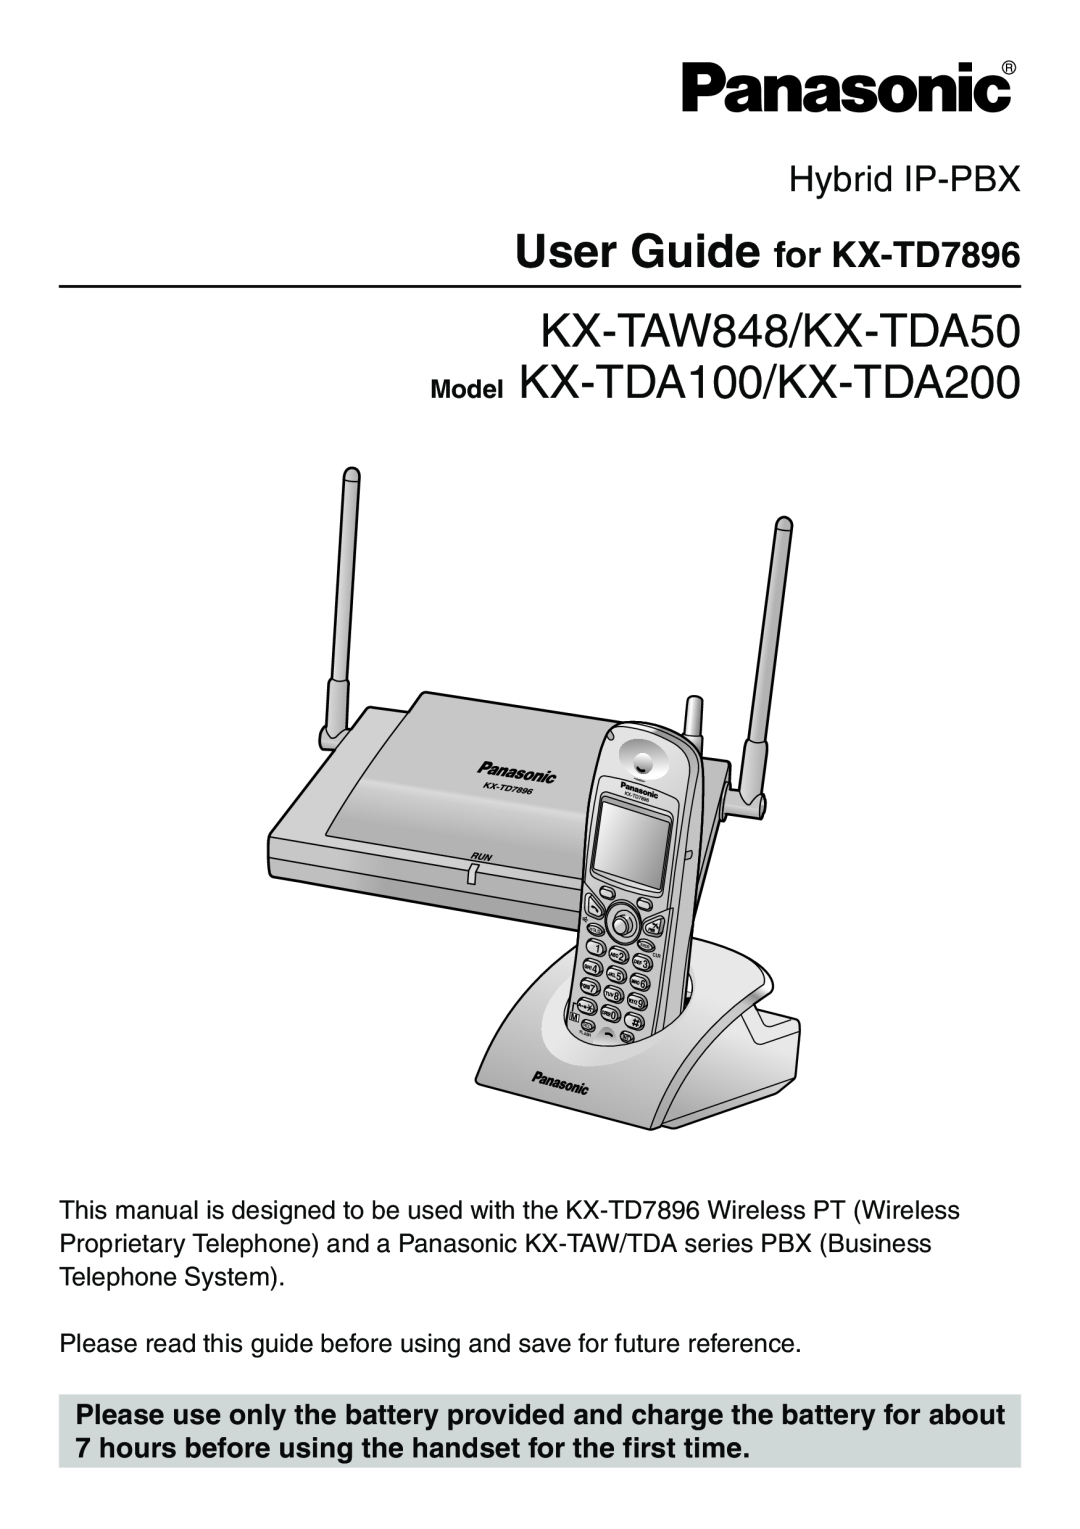 Panasonic installation manual Hybrid IP-PBX, Installation Manual, KX-TDA200, Model No. KX-TDA100, SD Logo is 